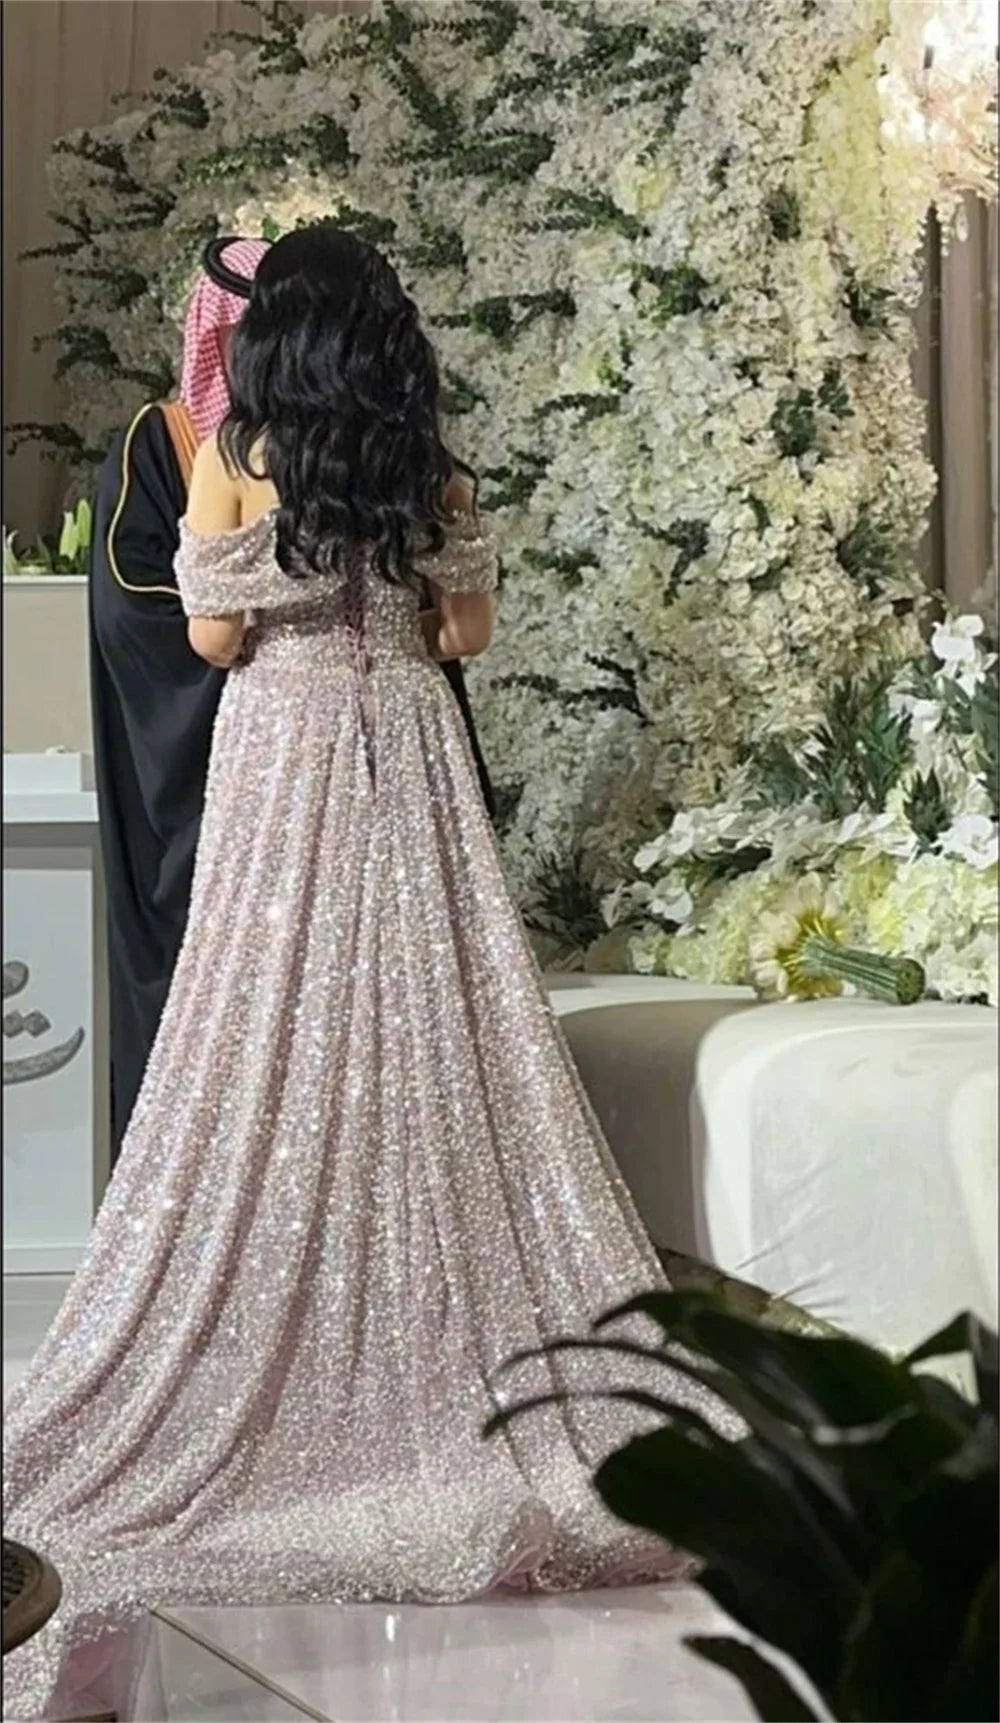 Luxury Purple Glitter Sequins Mermaid Wedding Dress Elegant Sleeveless فستان حفلات الزفاف Off Shoulder Prom Dress